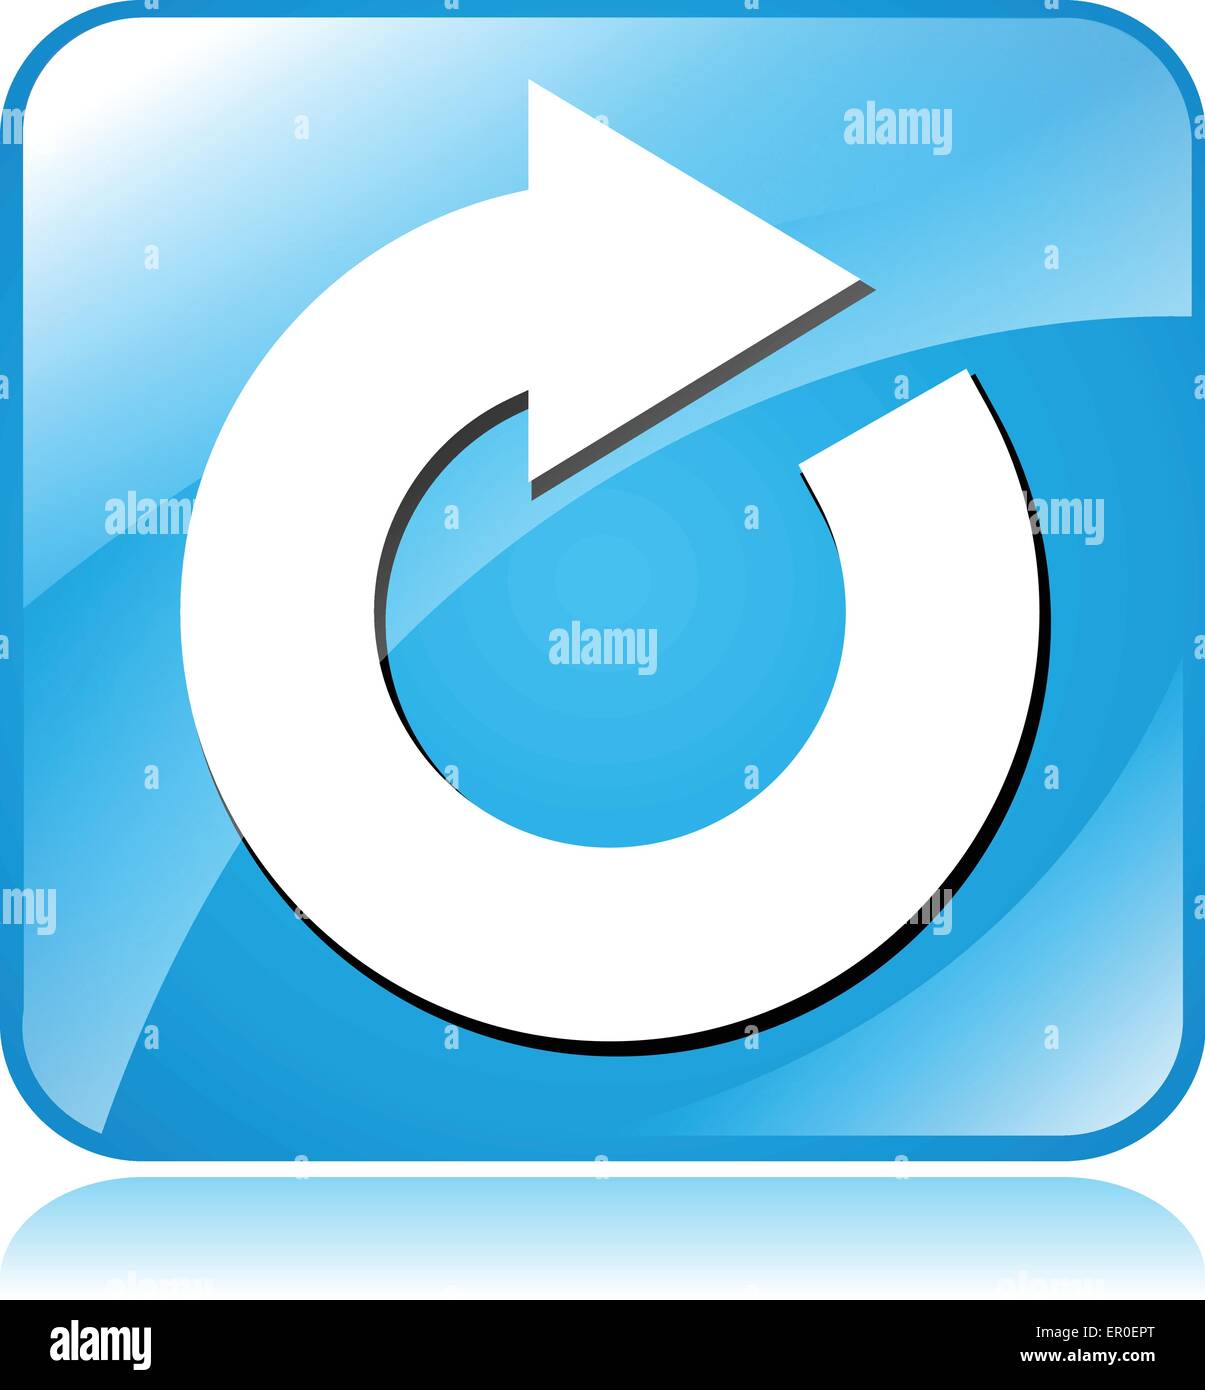 Illustration of blue square design icon for refresh Stock Vector